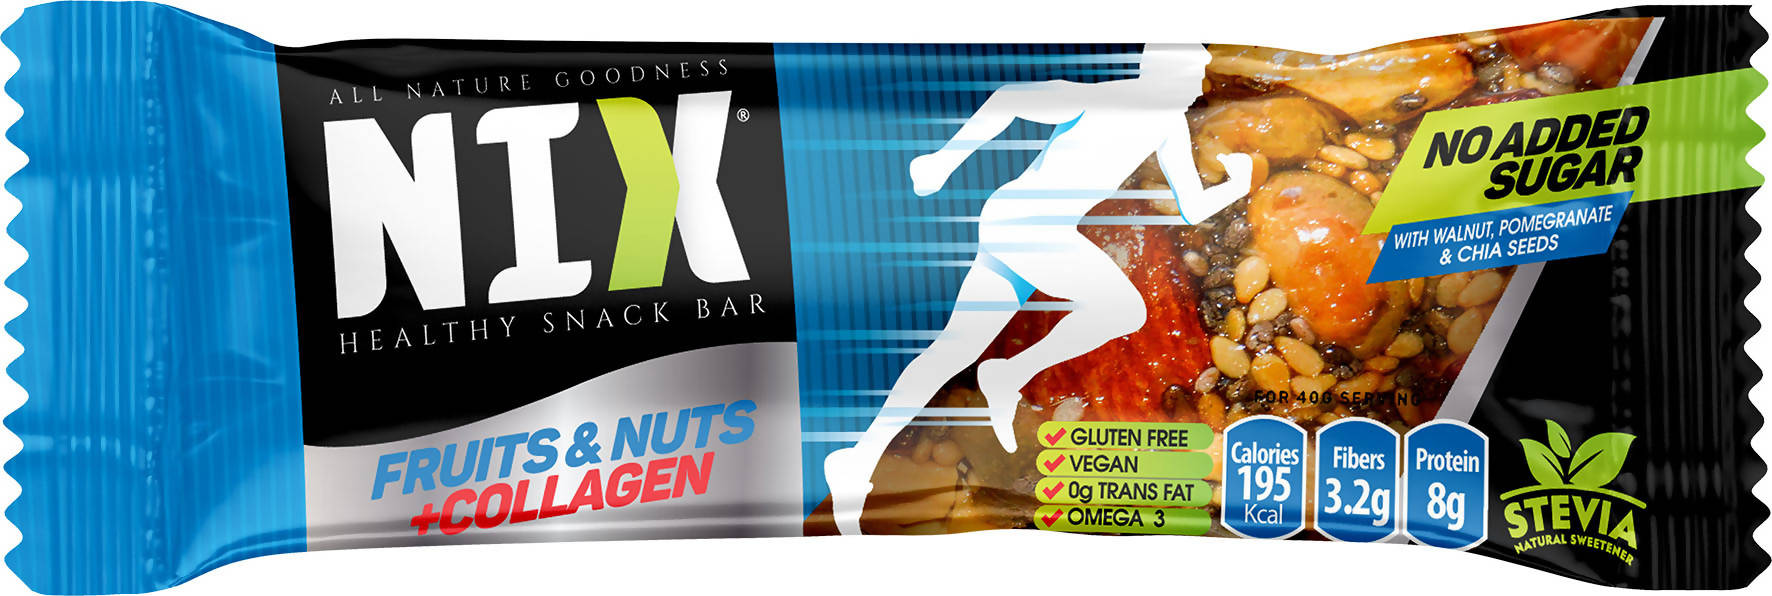 NIX F&N + Collagen Gluten Free vegan Stevia